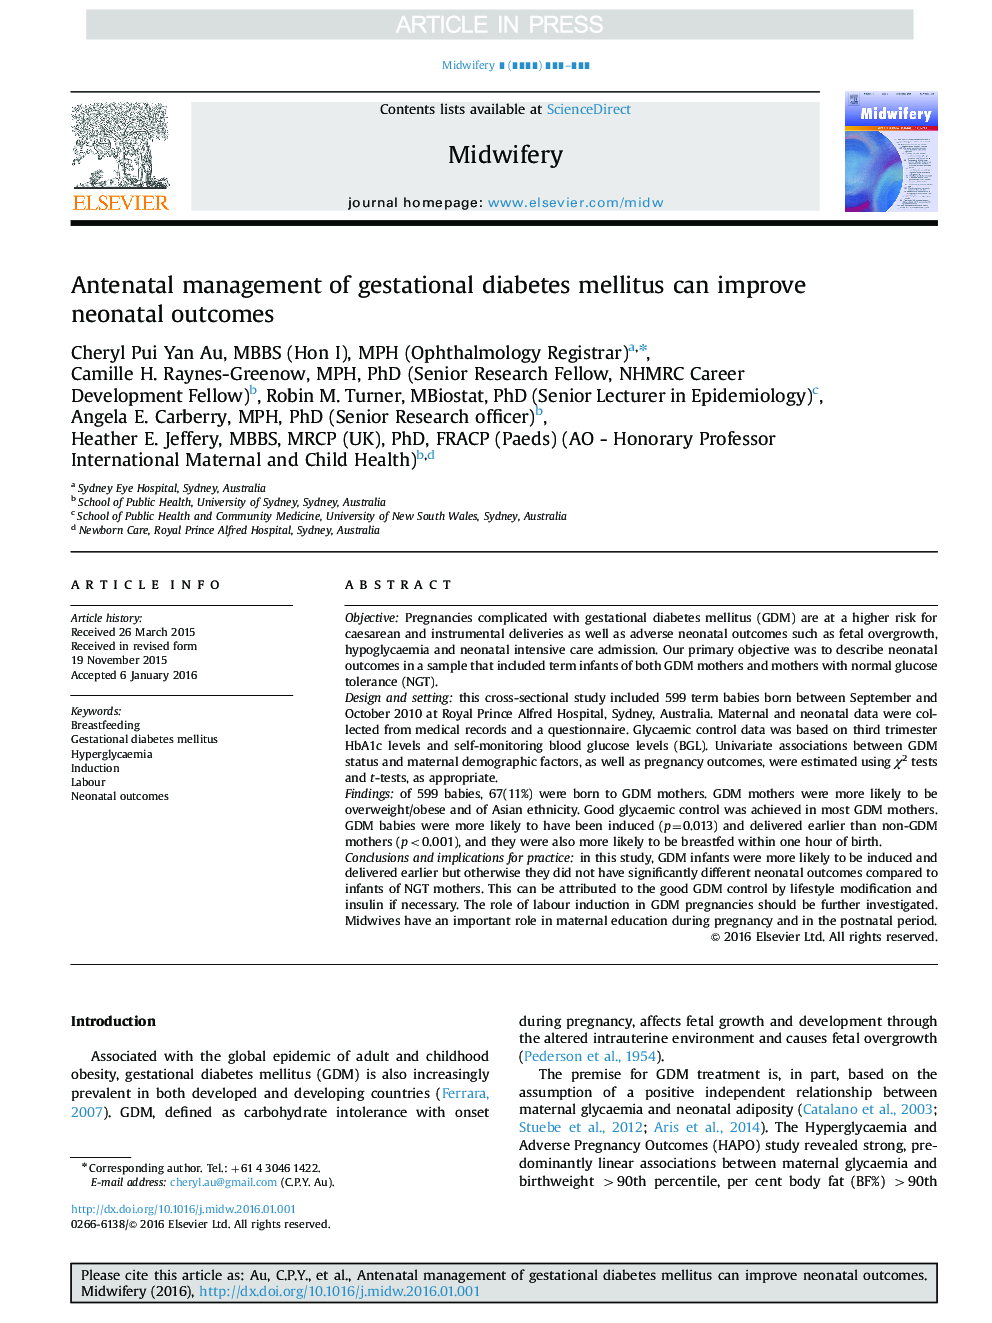 Antenatal management of gestational diabetes mellitus can improve neonatal outcomes